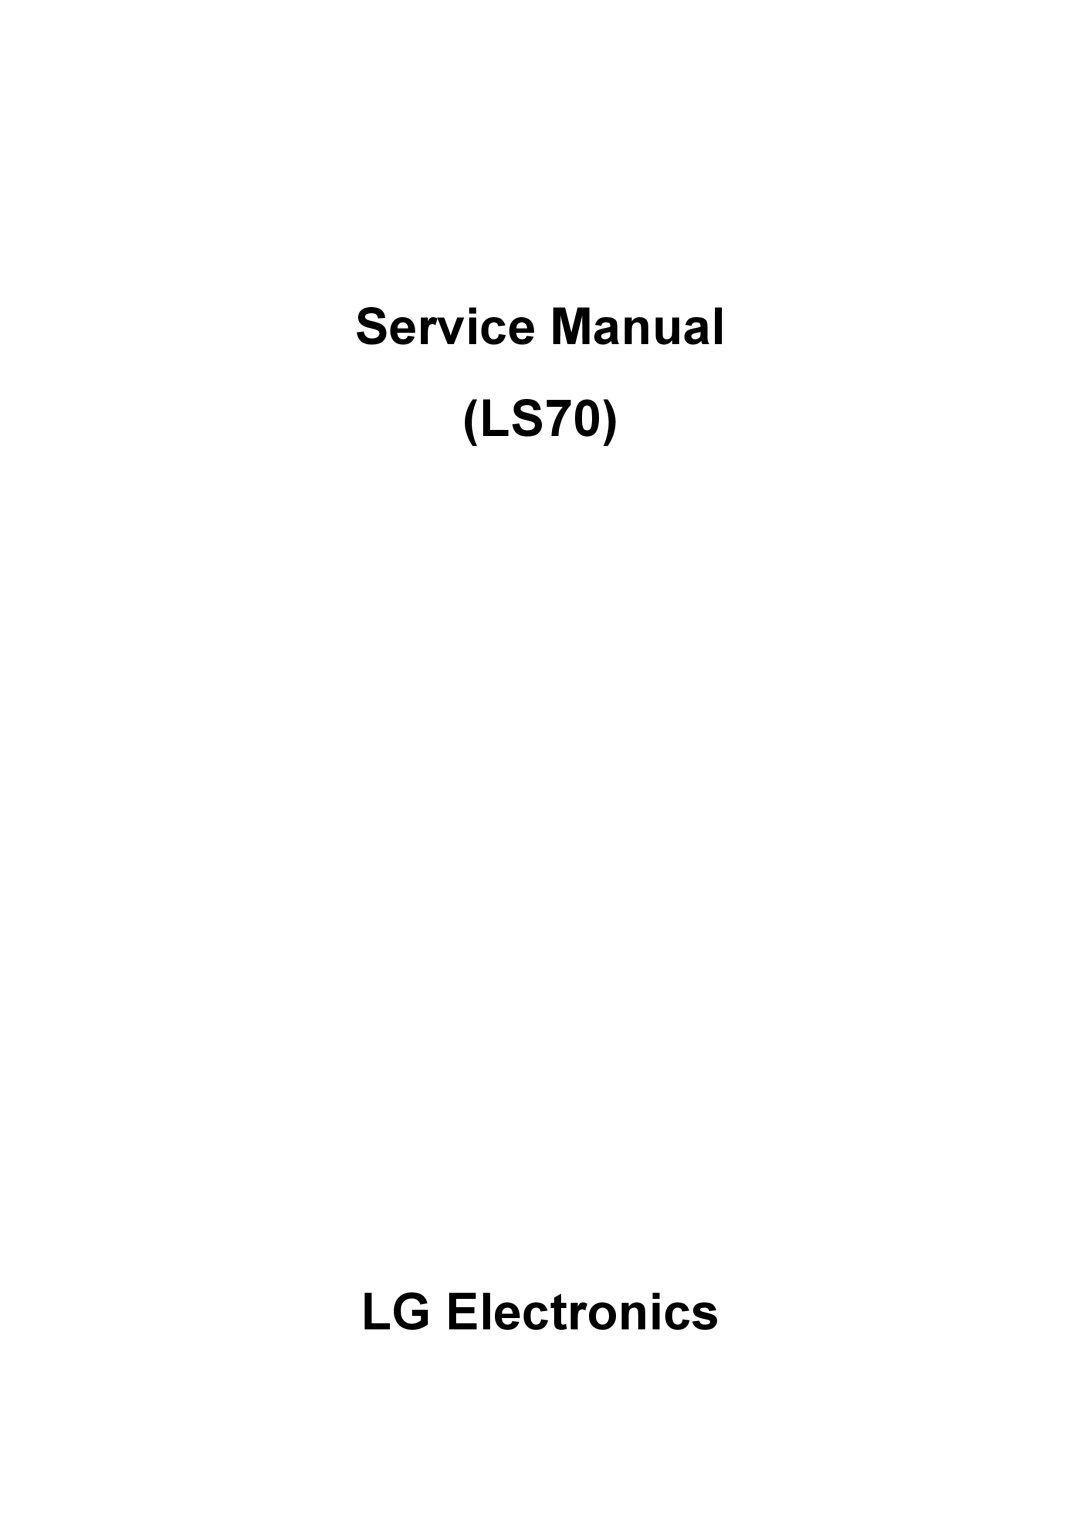 LG Electronics service manual Service Manual, LS70 LG Electronics 